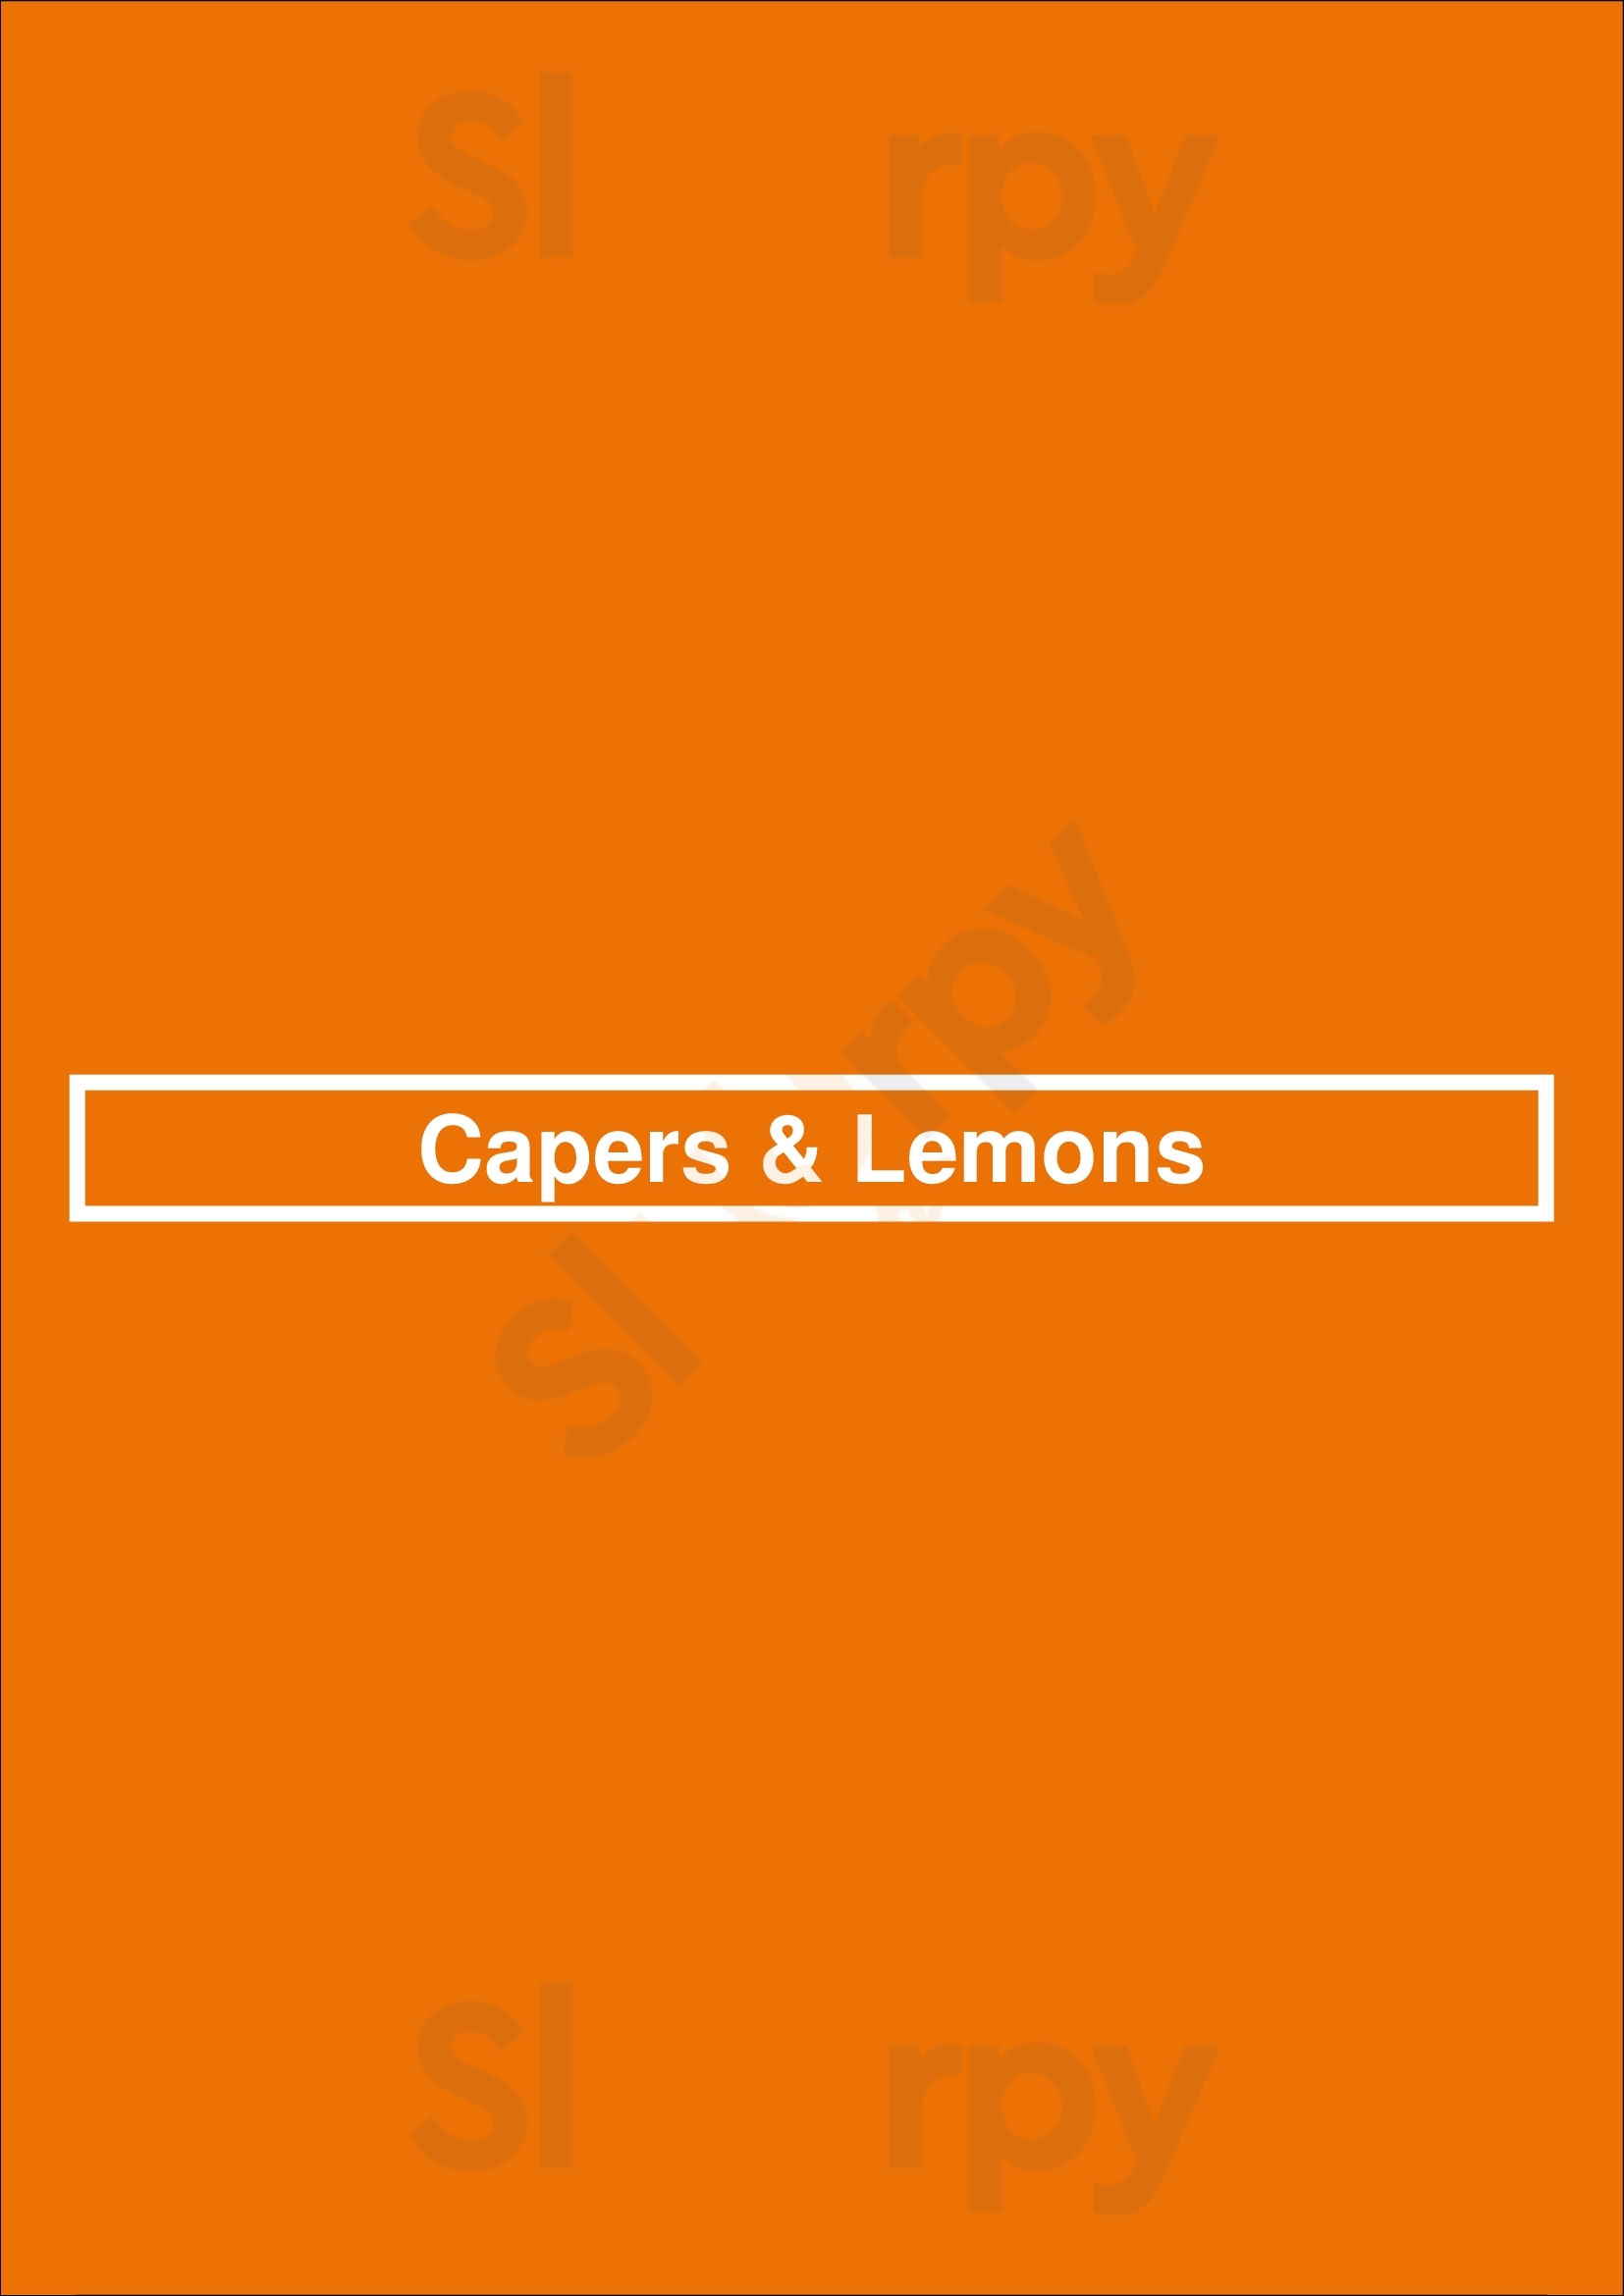 Capers & Lemons Wilmington Menu - 1